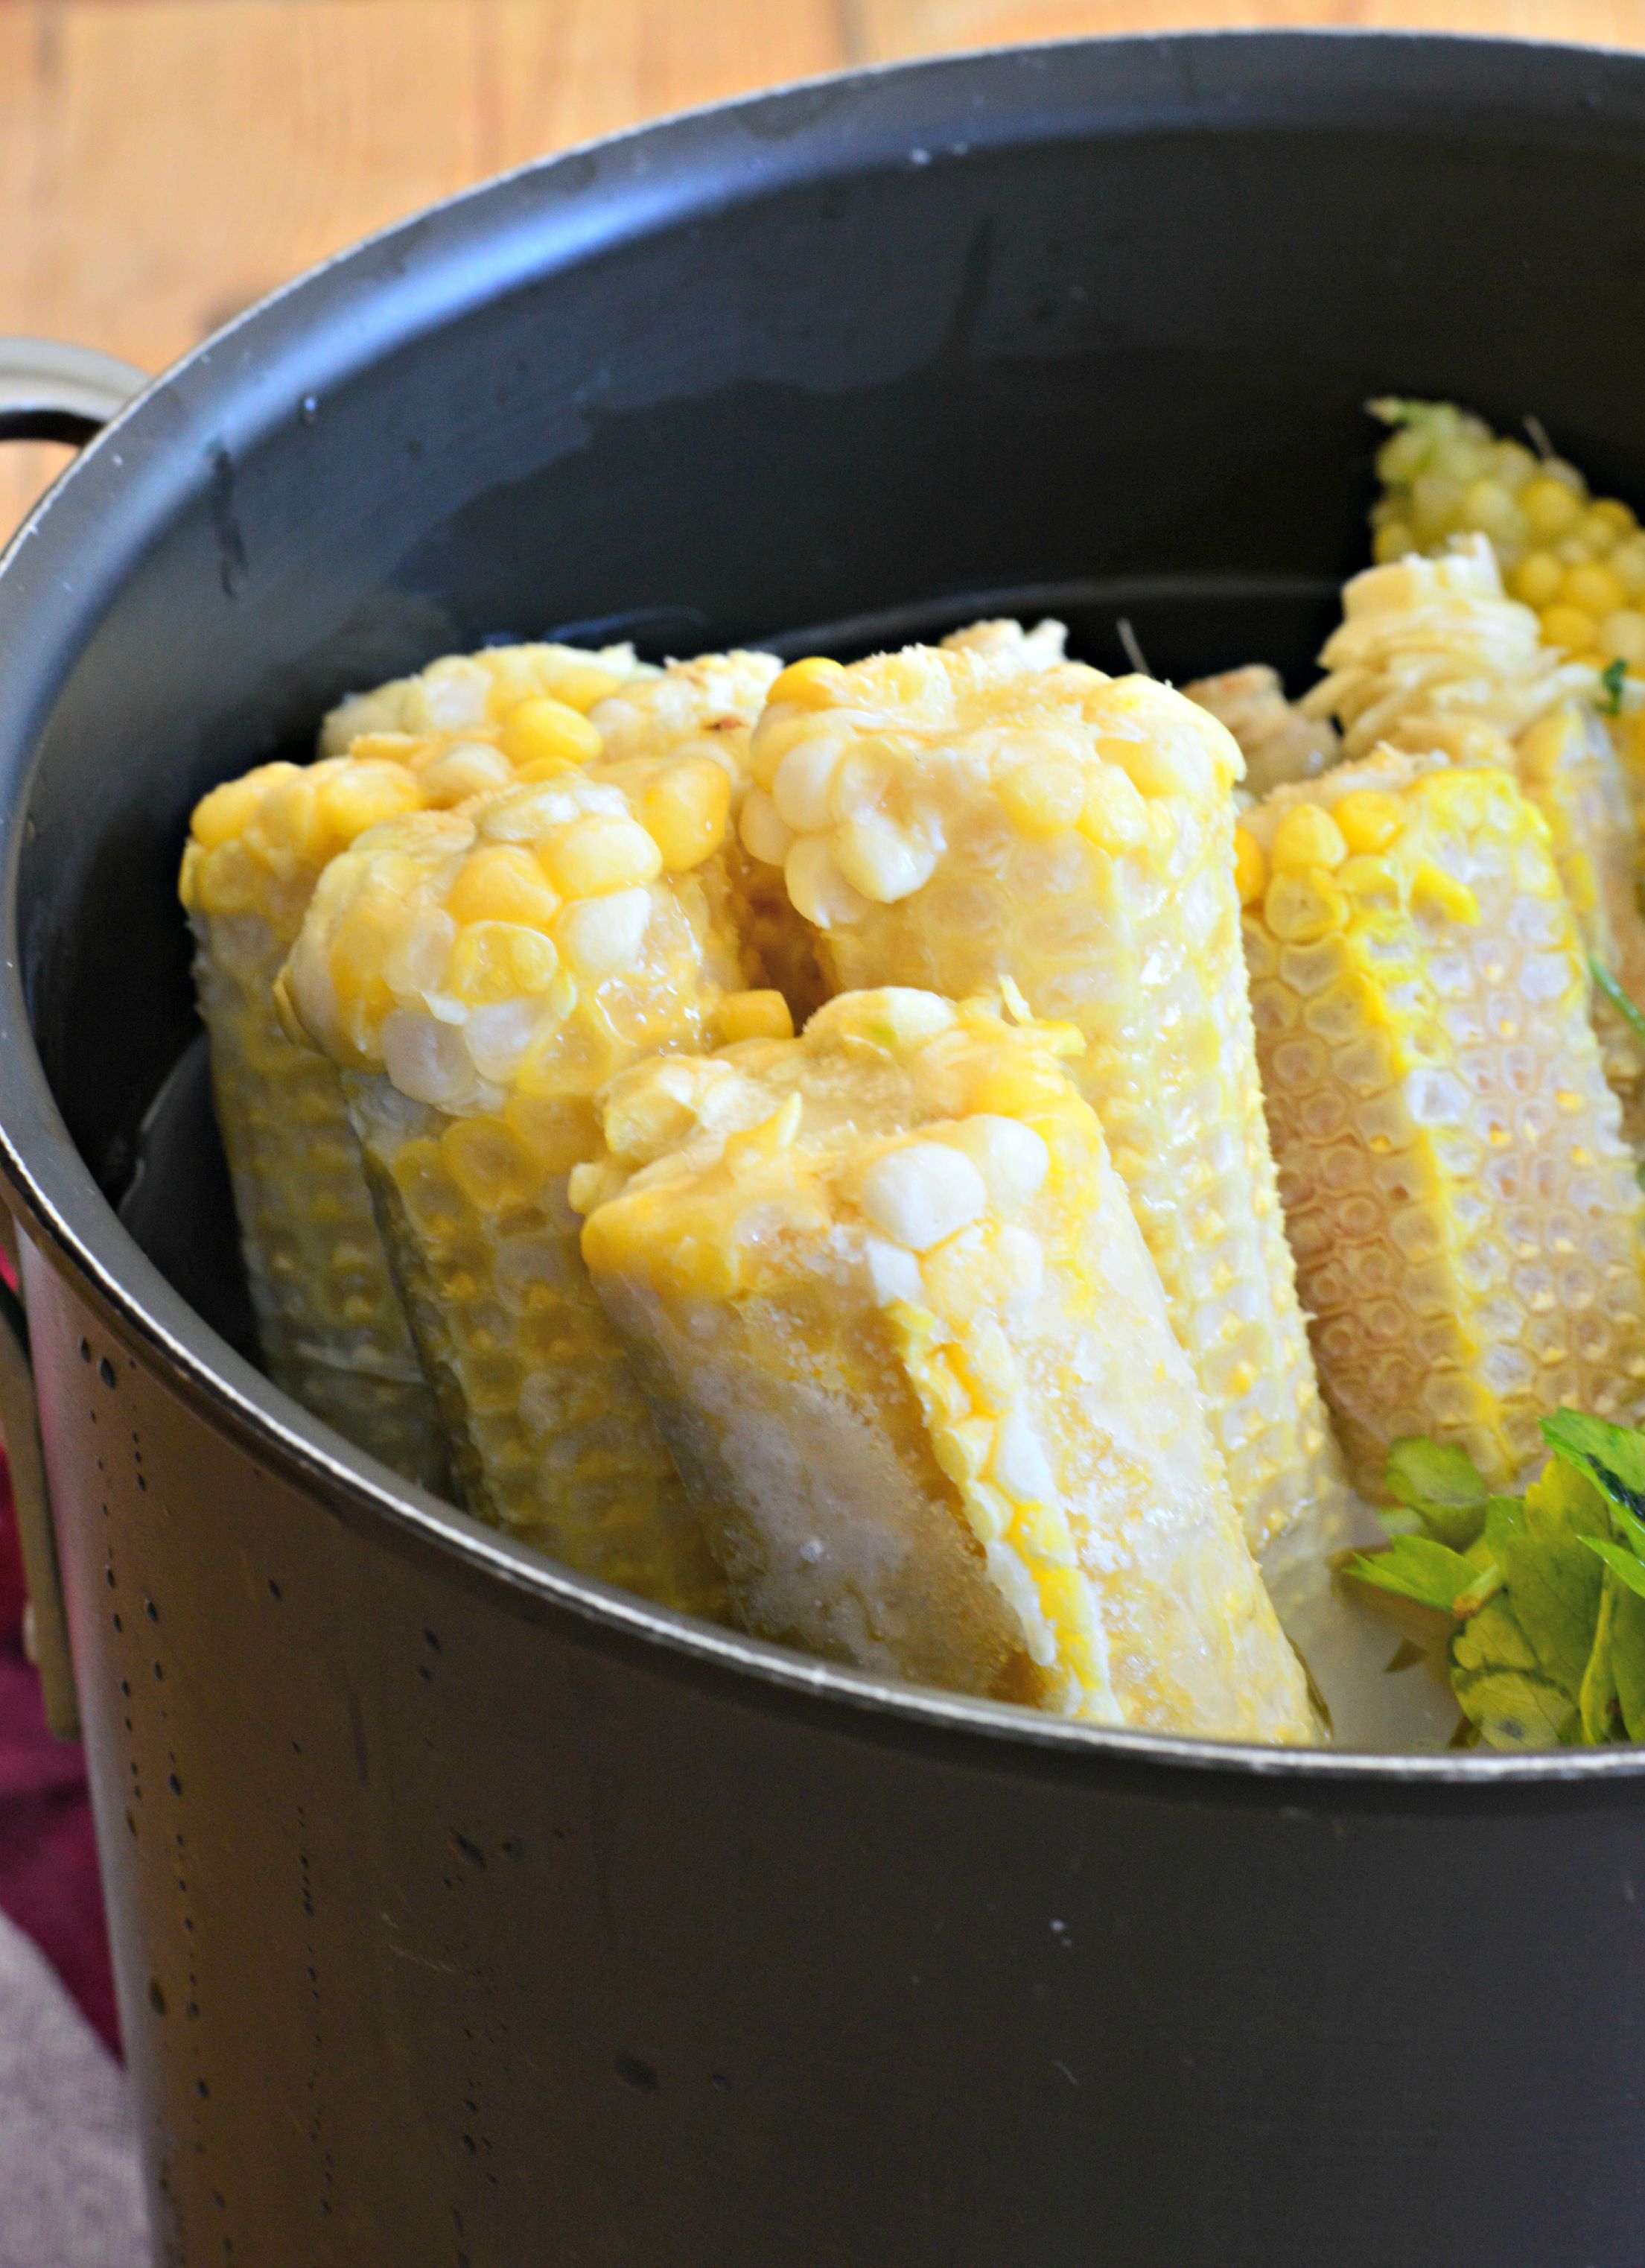 Рецепт из свежей кукурузы. Блюда из кукурузы. Маринованные кукурузные початки. Консервирование кукурузы. Блюда с кукурузой консервированной.